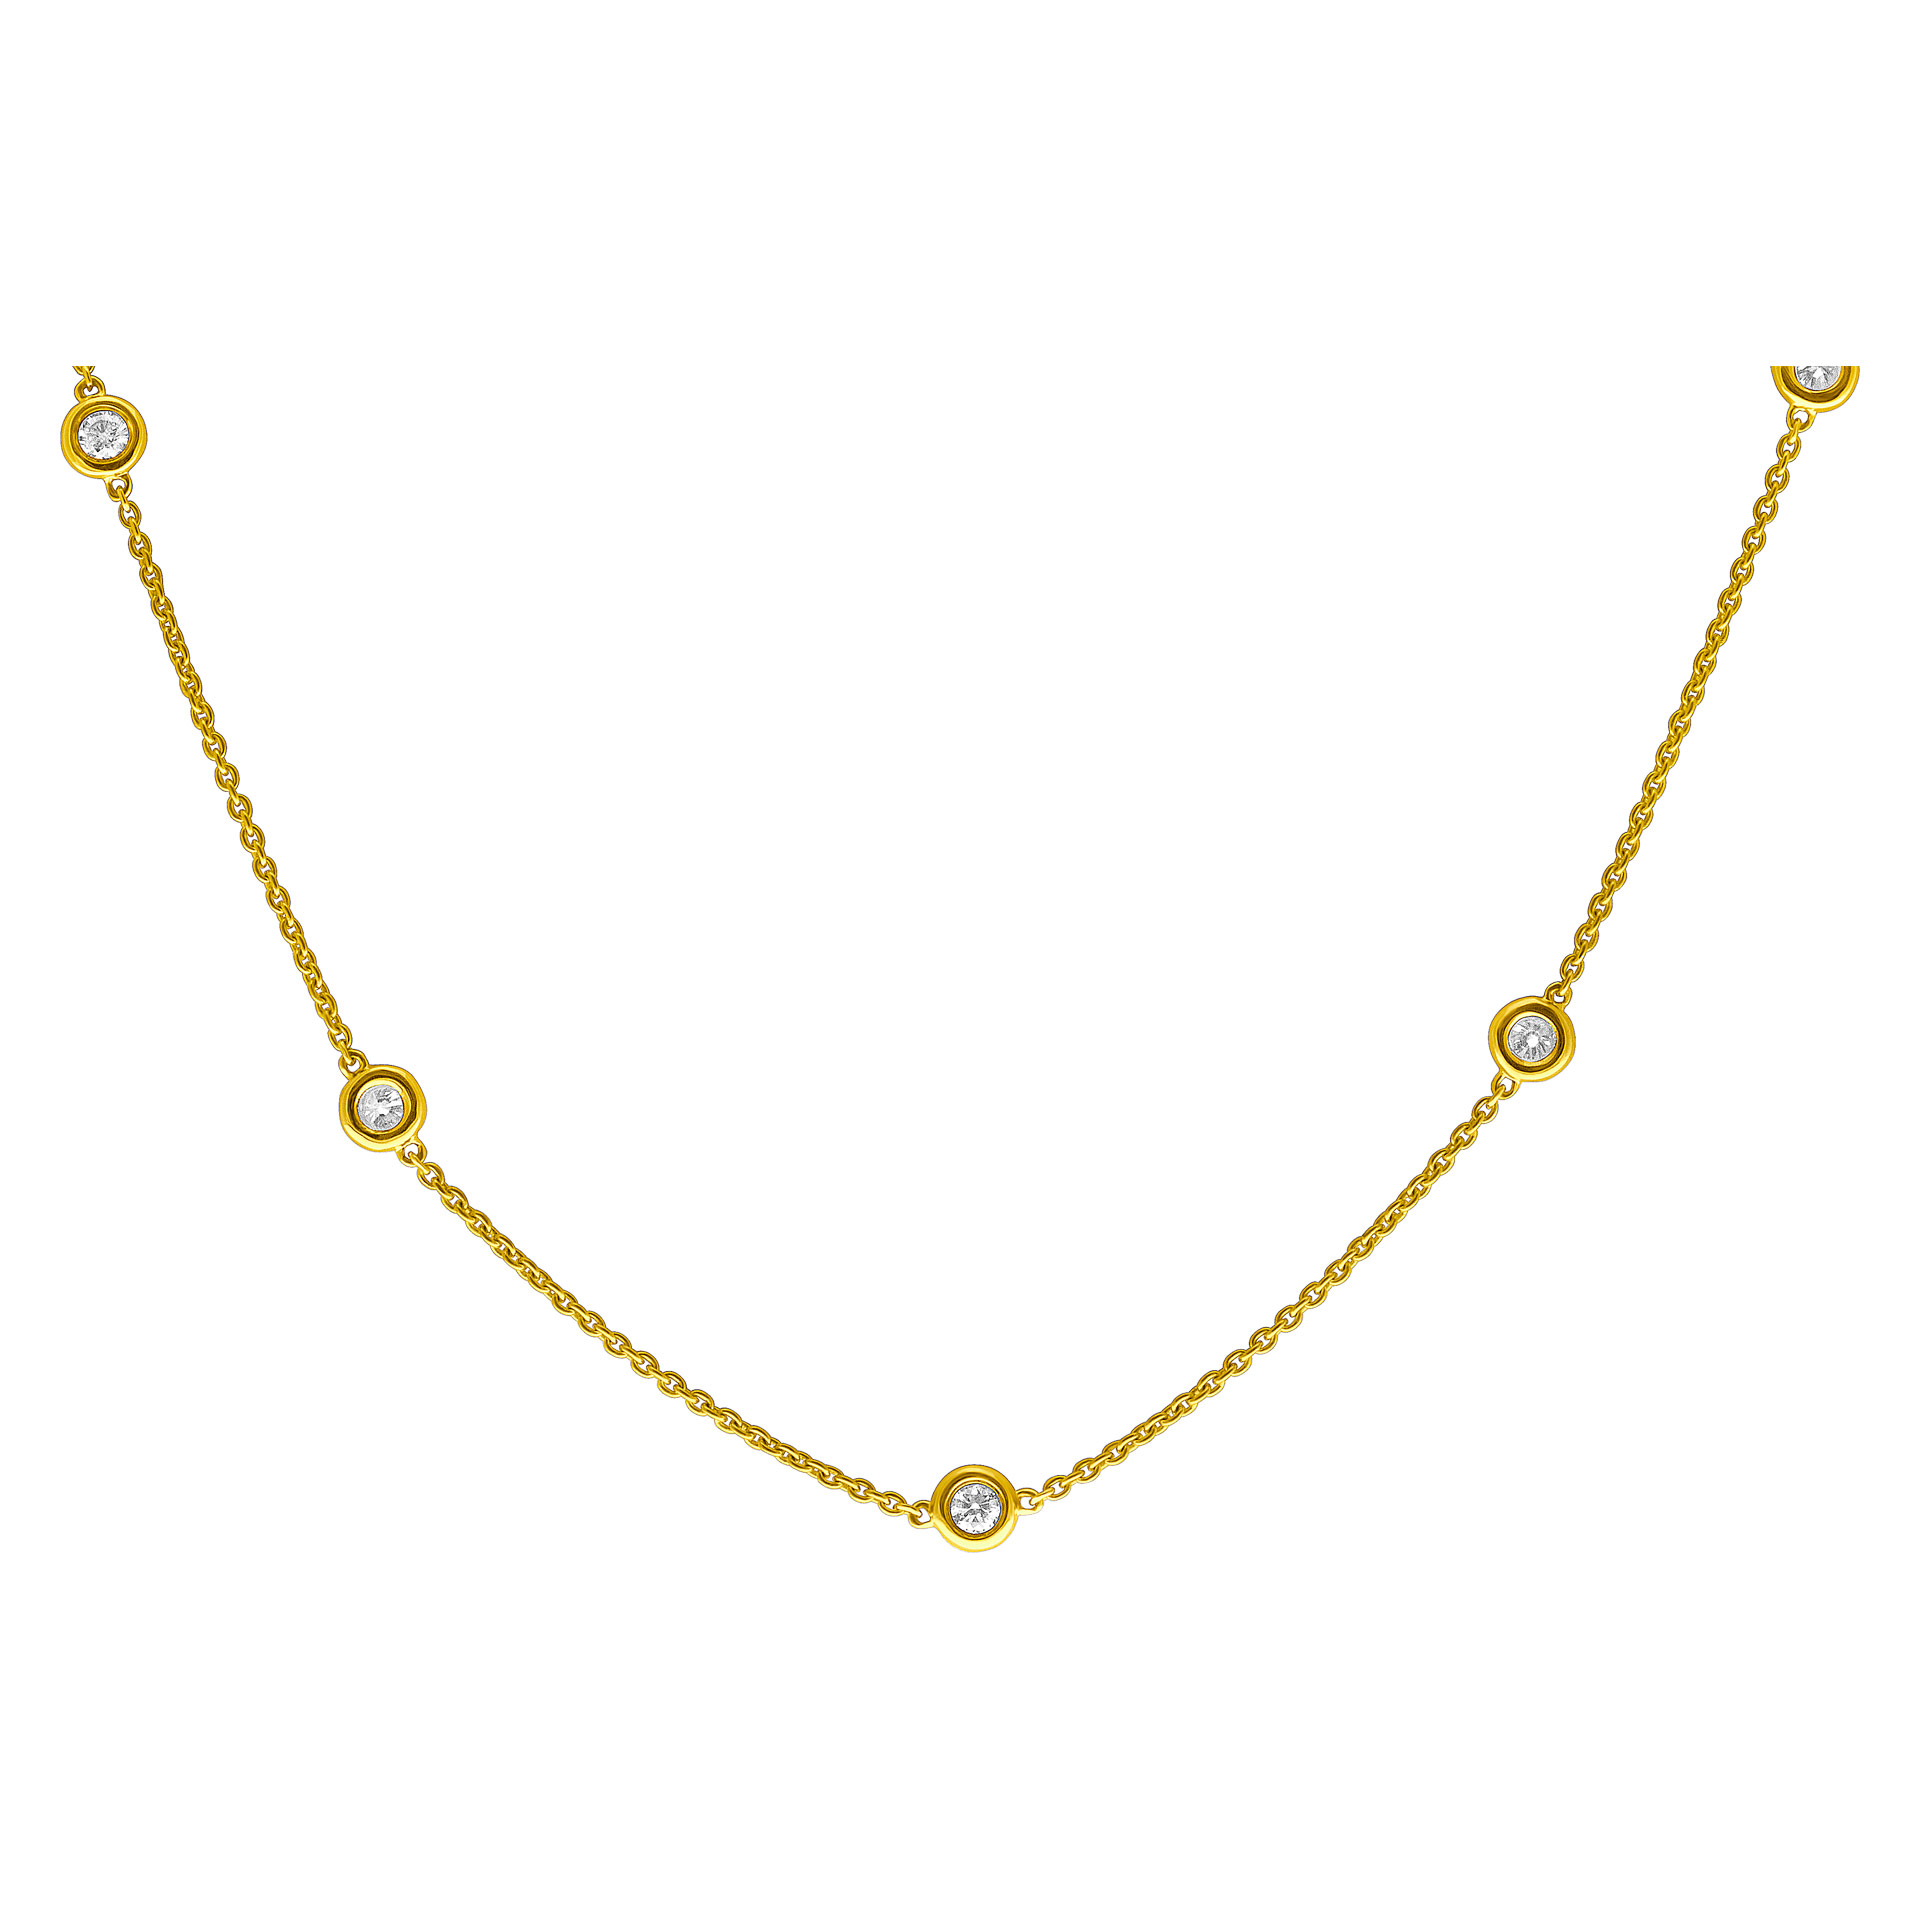 Diamonds by the yard, 14k yellow gold chain (36"), with 2.25 carats round brilliant cut serti diamonds.